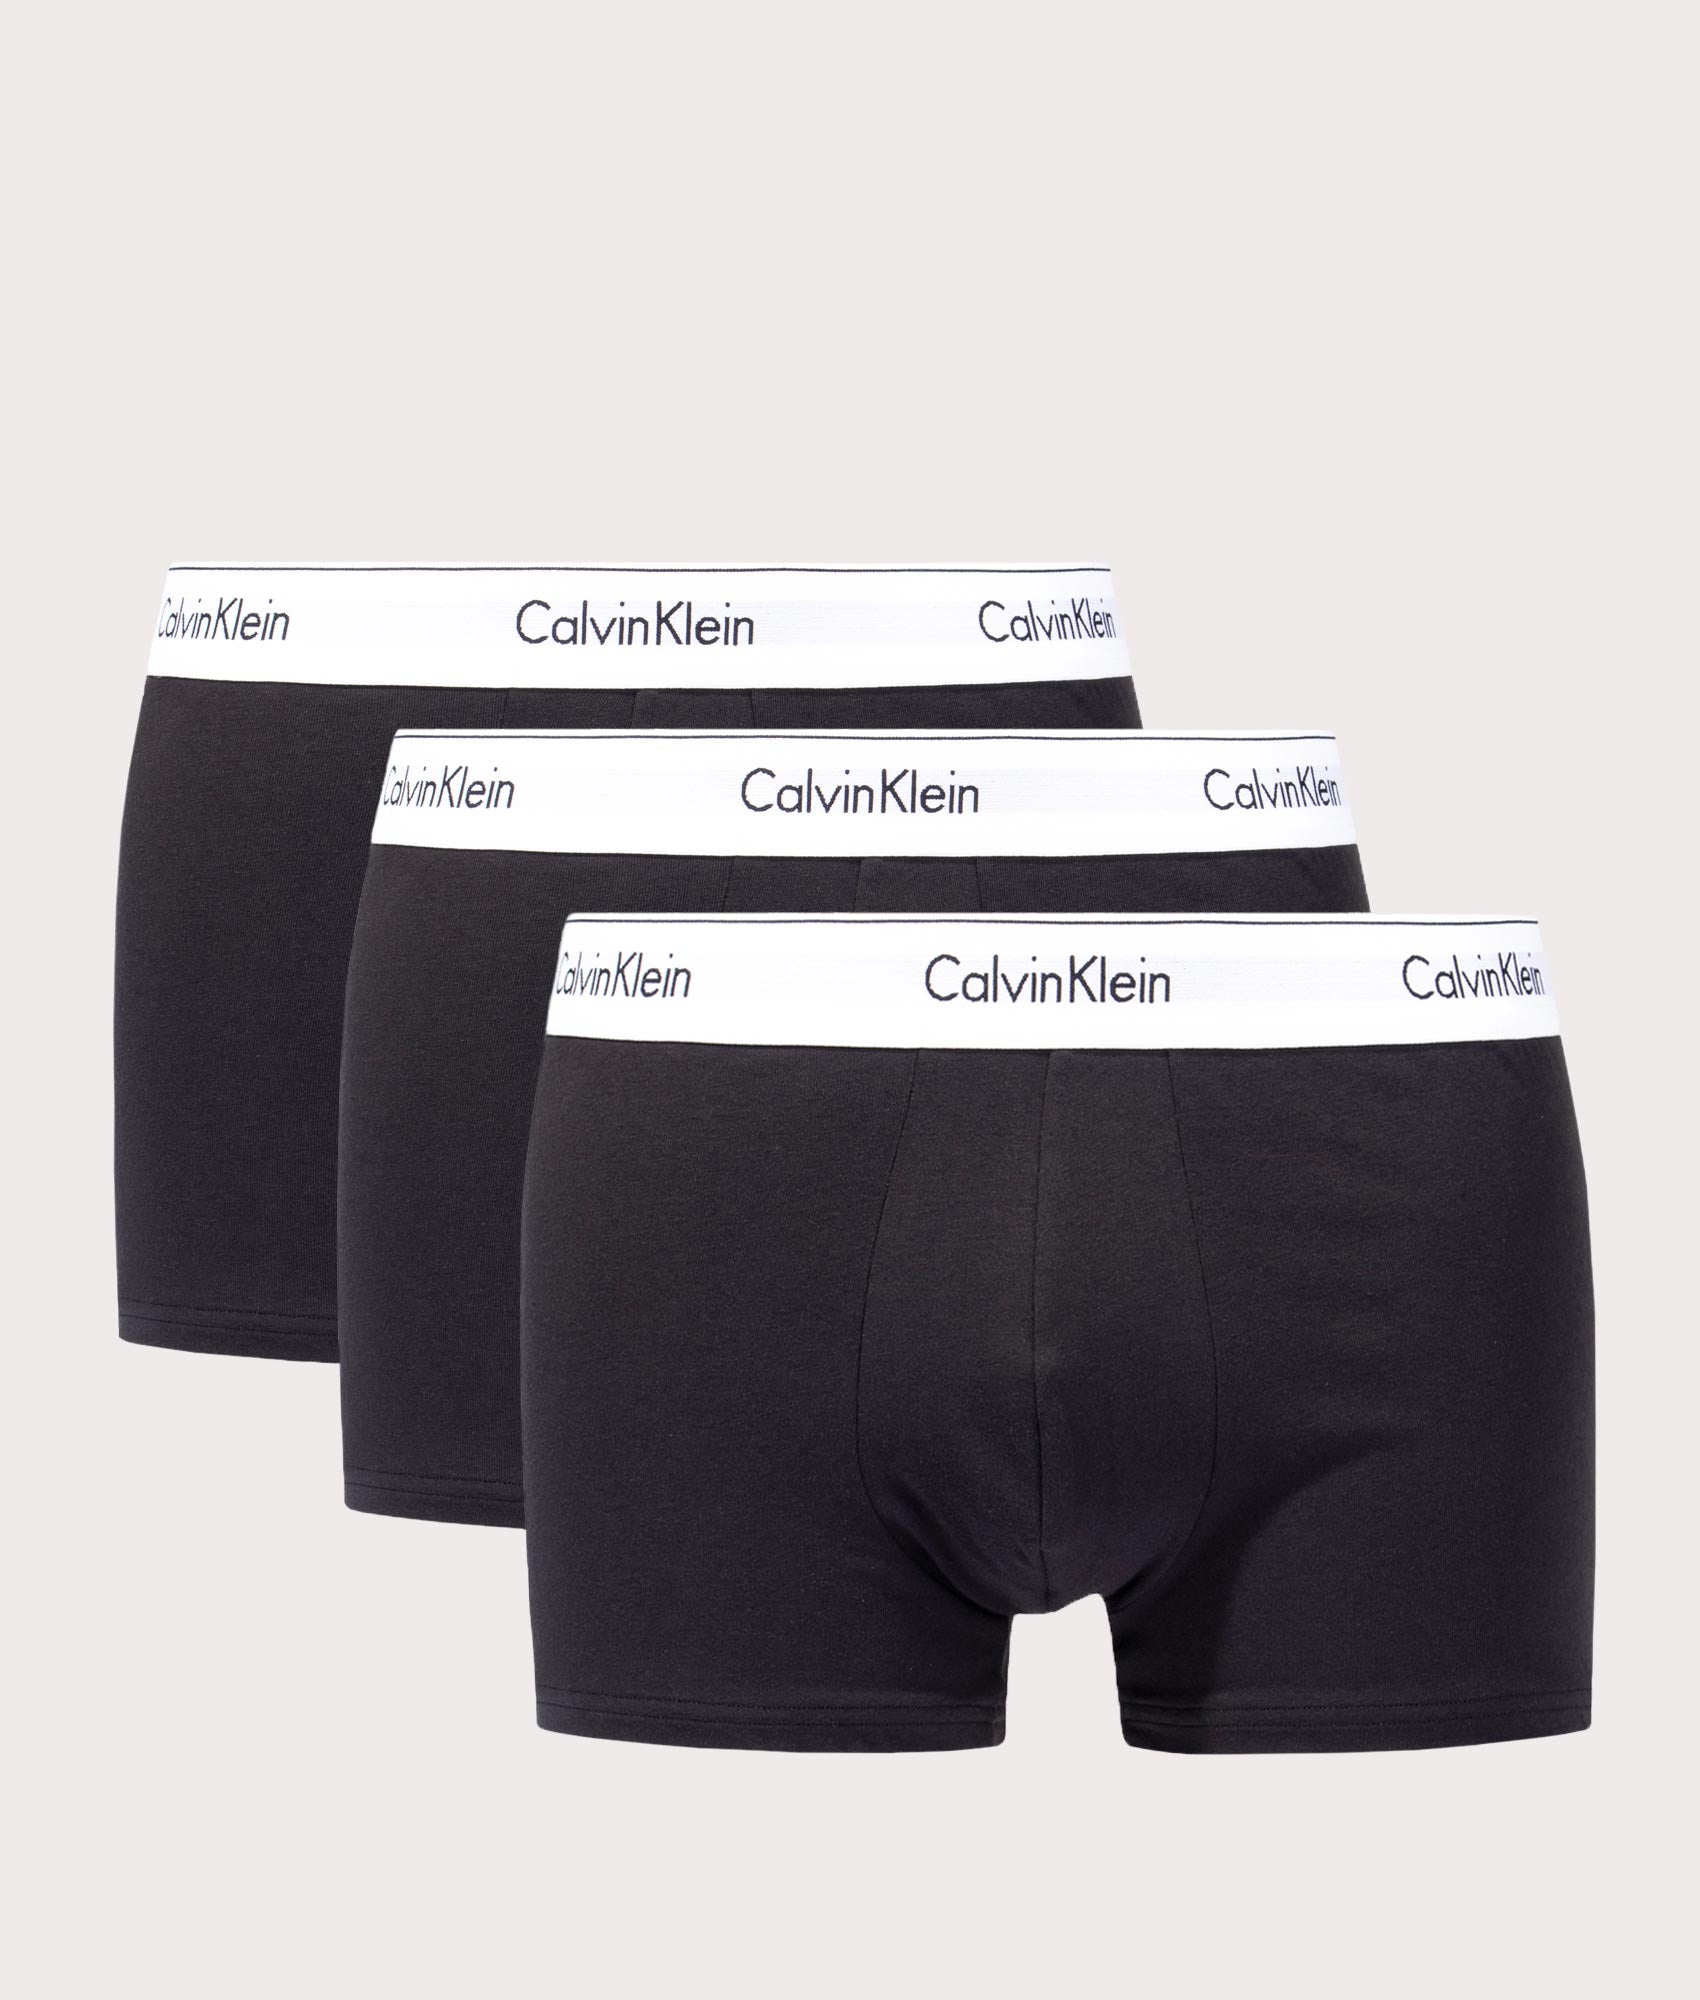 Calvin Klein Mens Three Pack of Modern Cotton Stretch Trunks - Colour: 001 Black/Black/Black - Size: